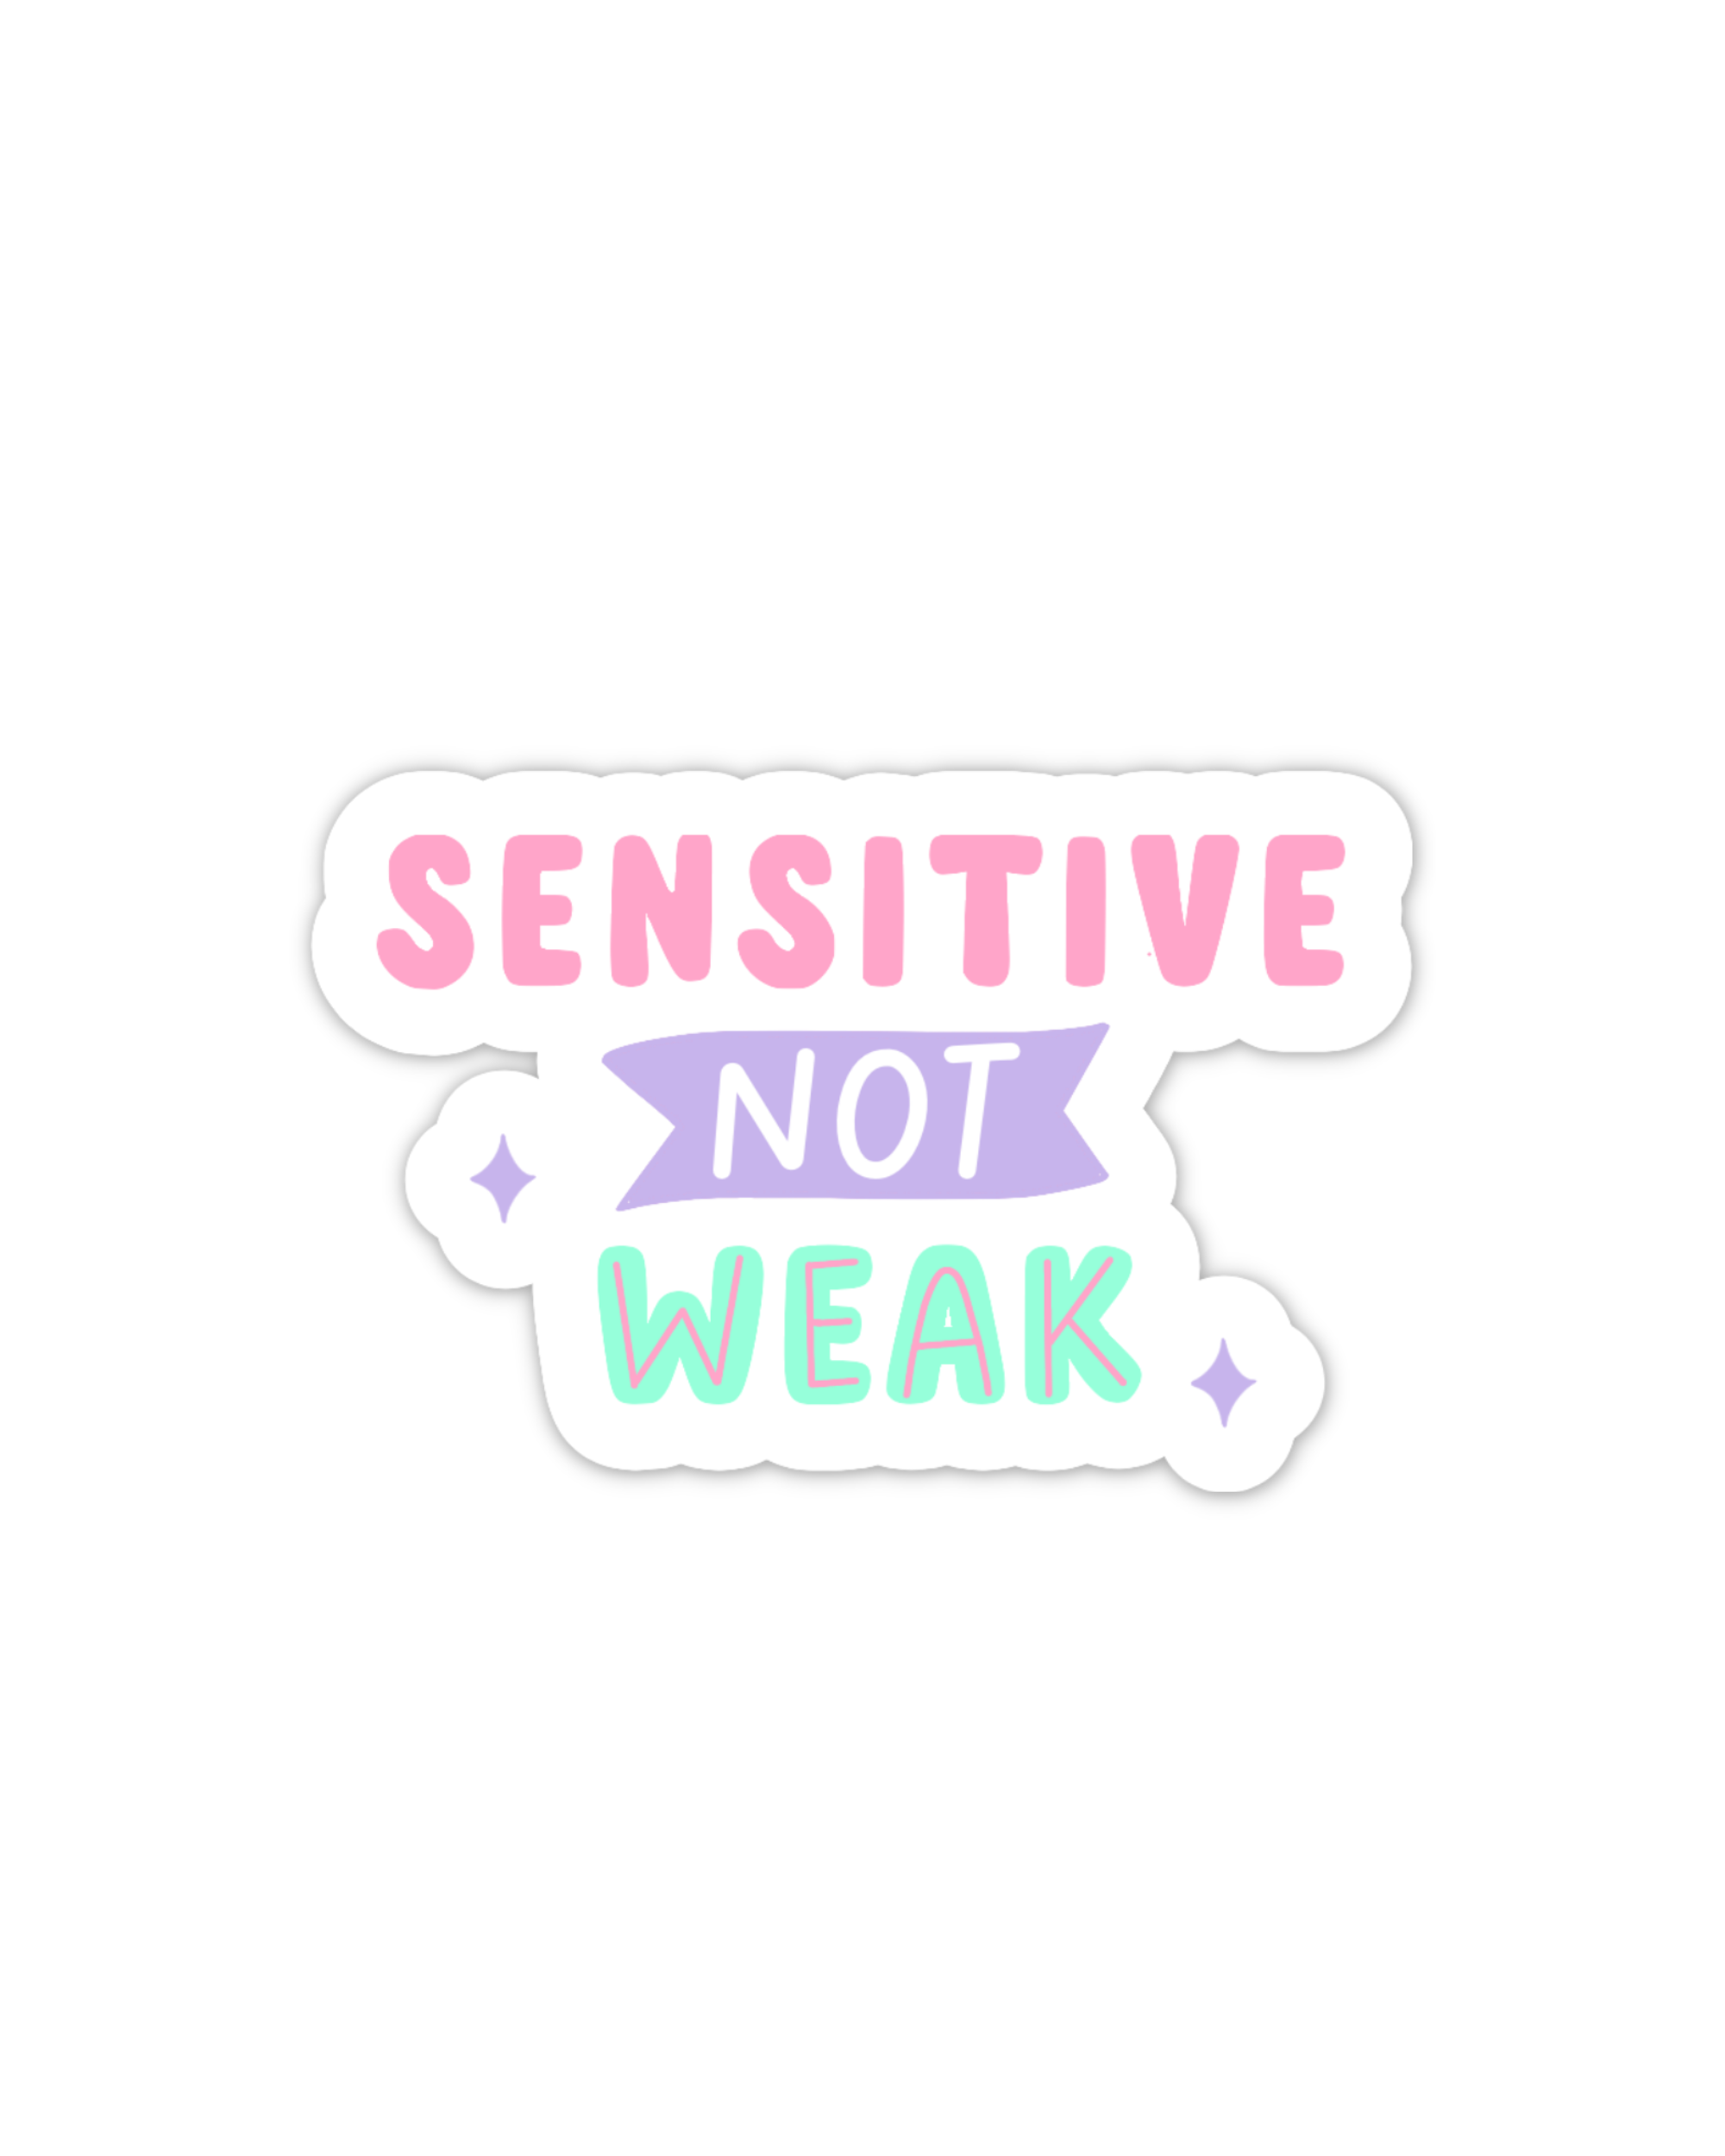 Sensitive not weak vinyl sticker